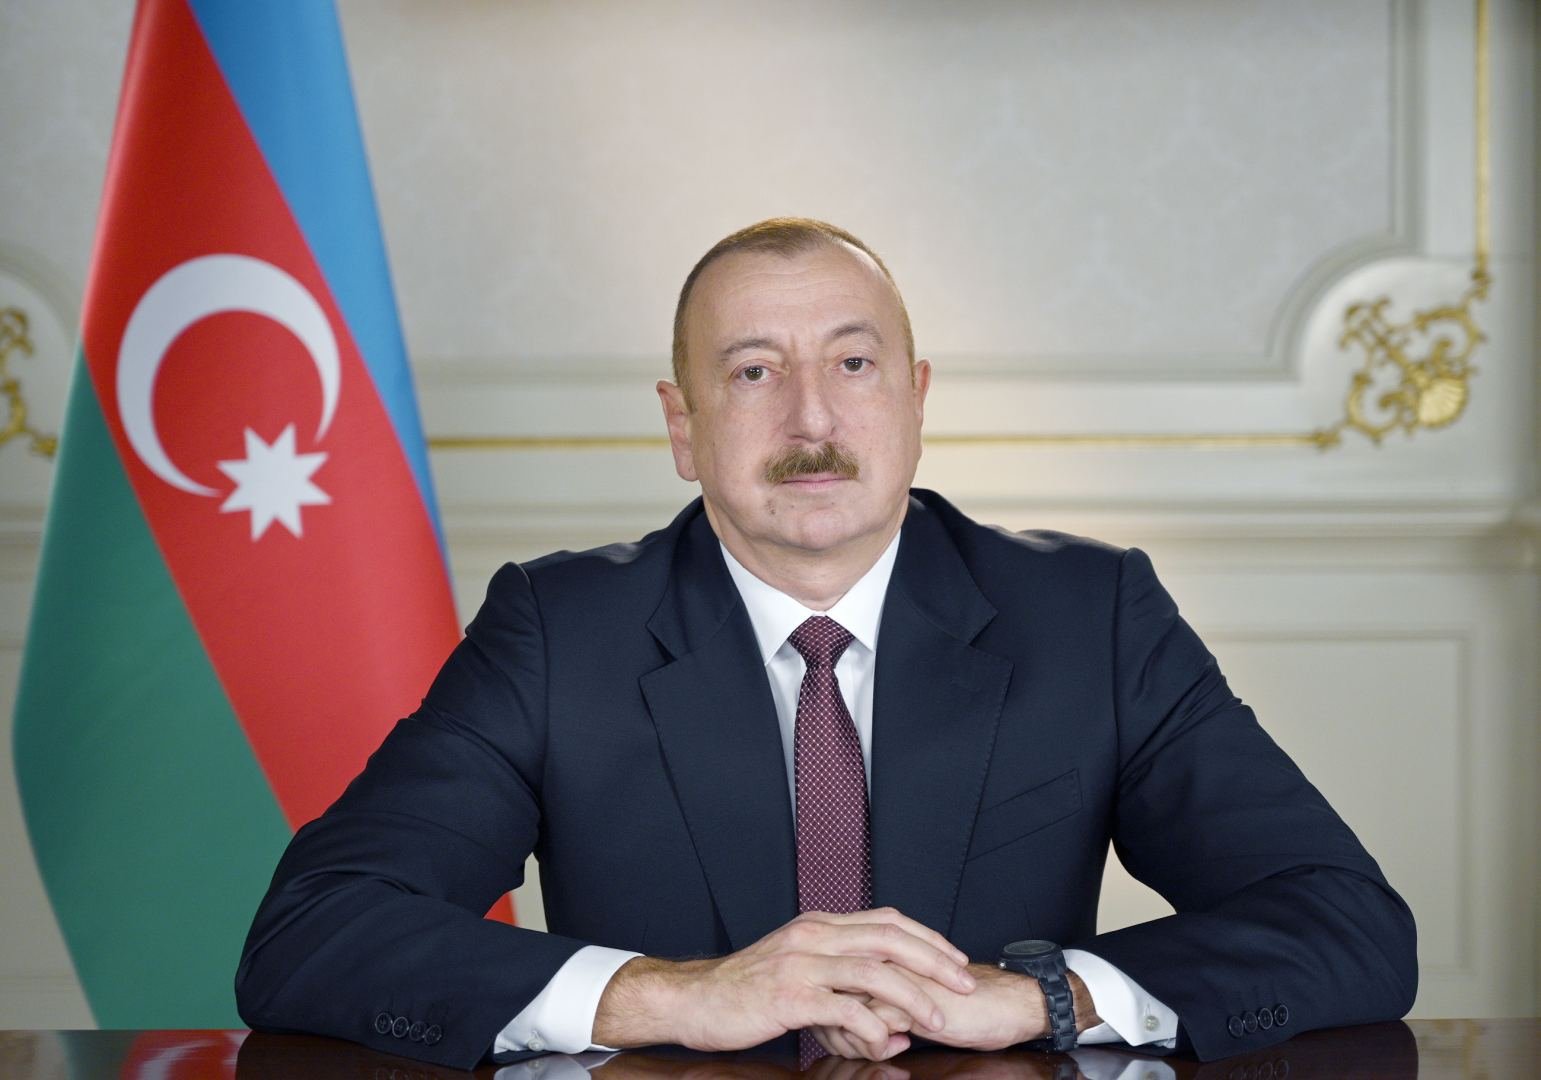 Azerbaijan shocked by news of numerous human casualties, following earthquake in Türkiye – President Ilham Aliyev